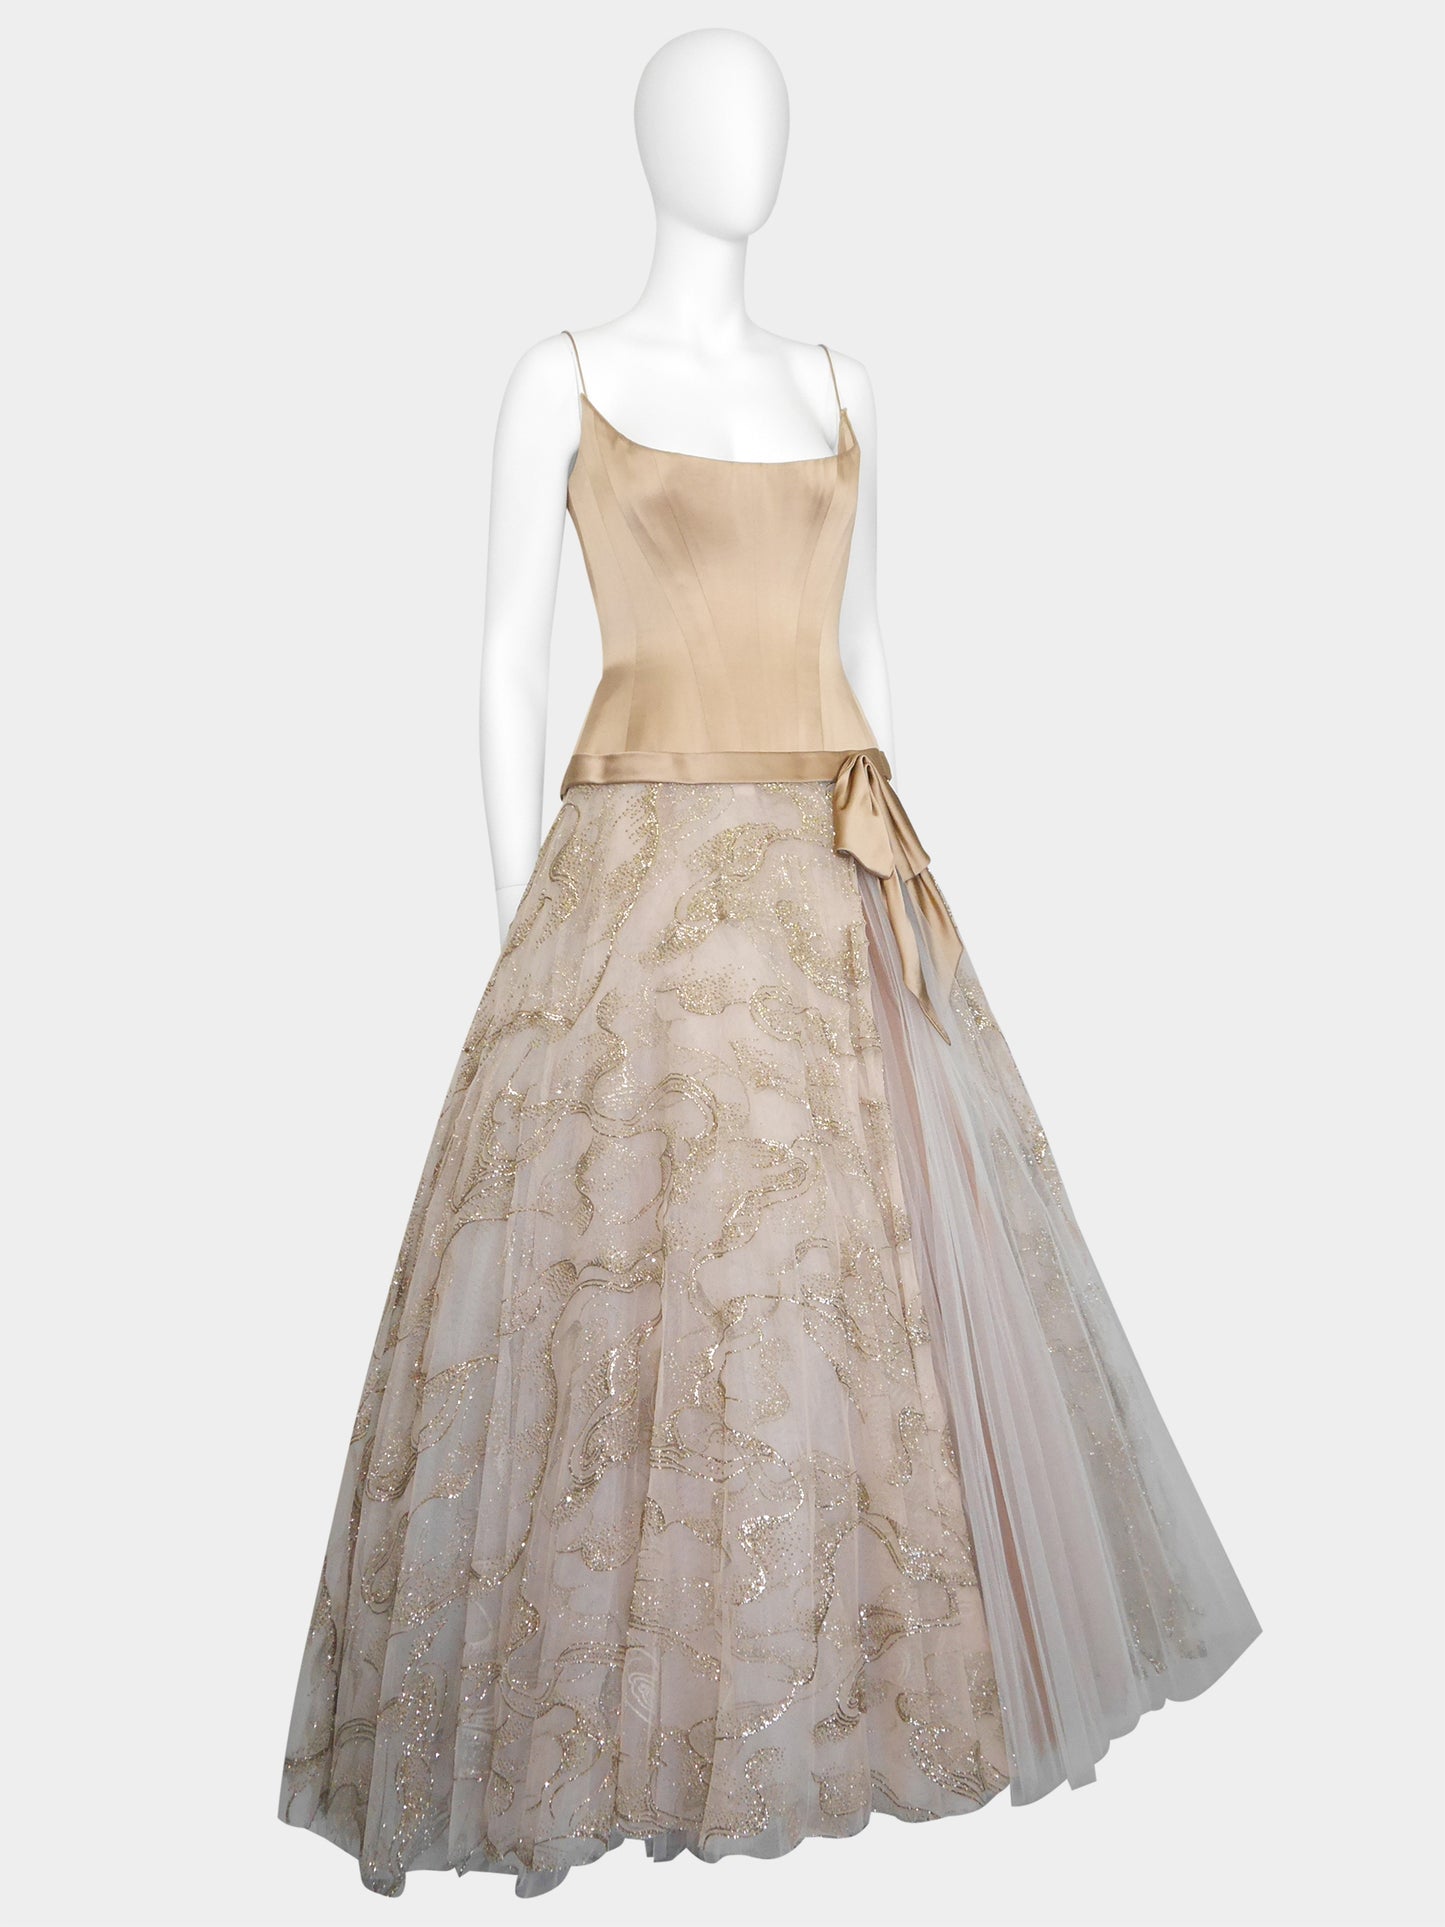 NINA RICCI 1990s Vintage Princess Ball Gown Evening Dress w/ Stole